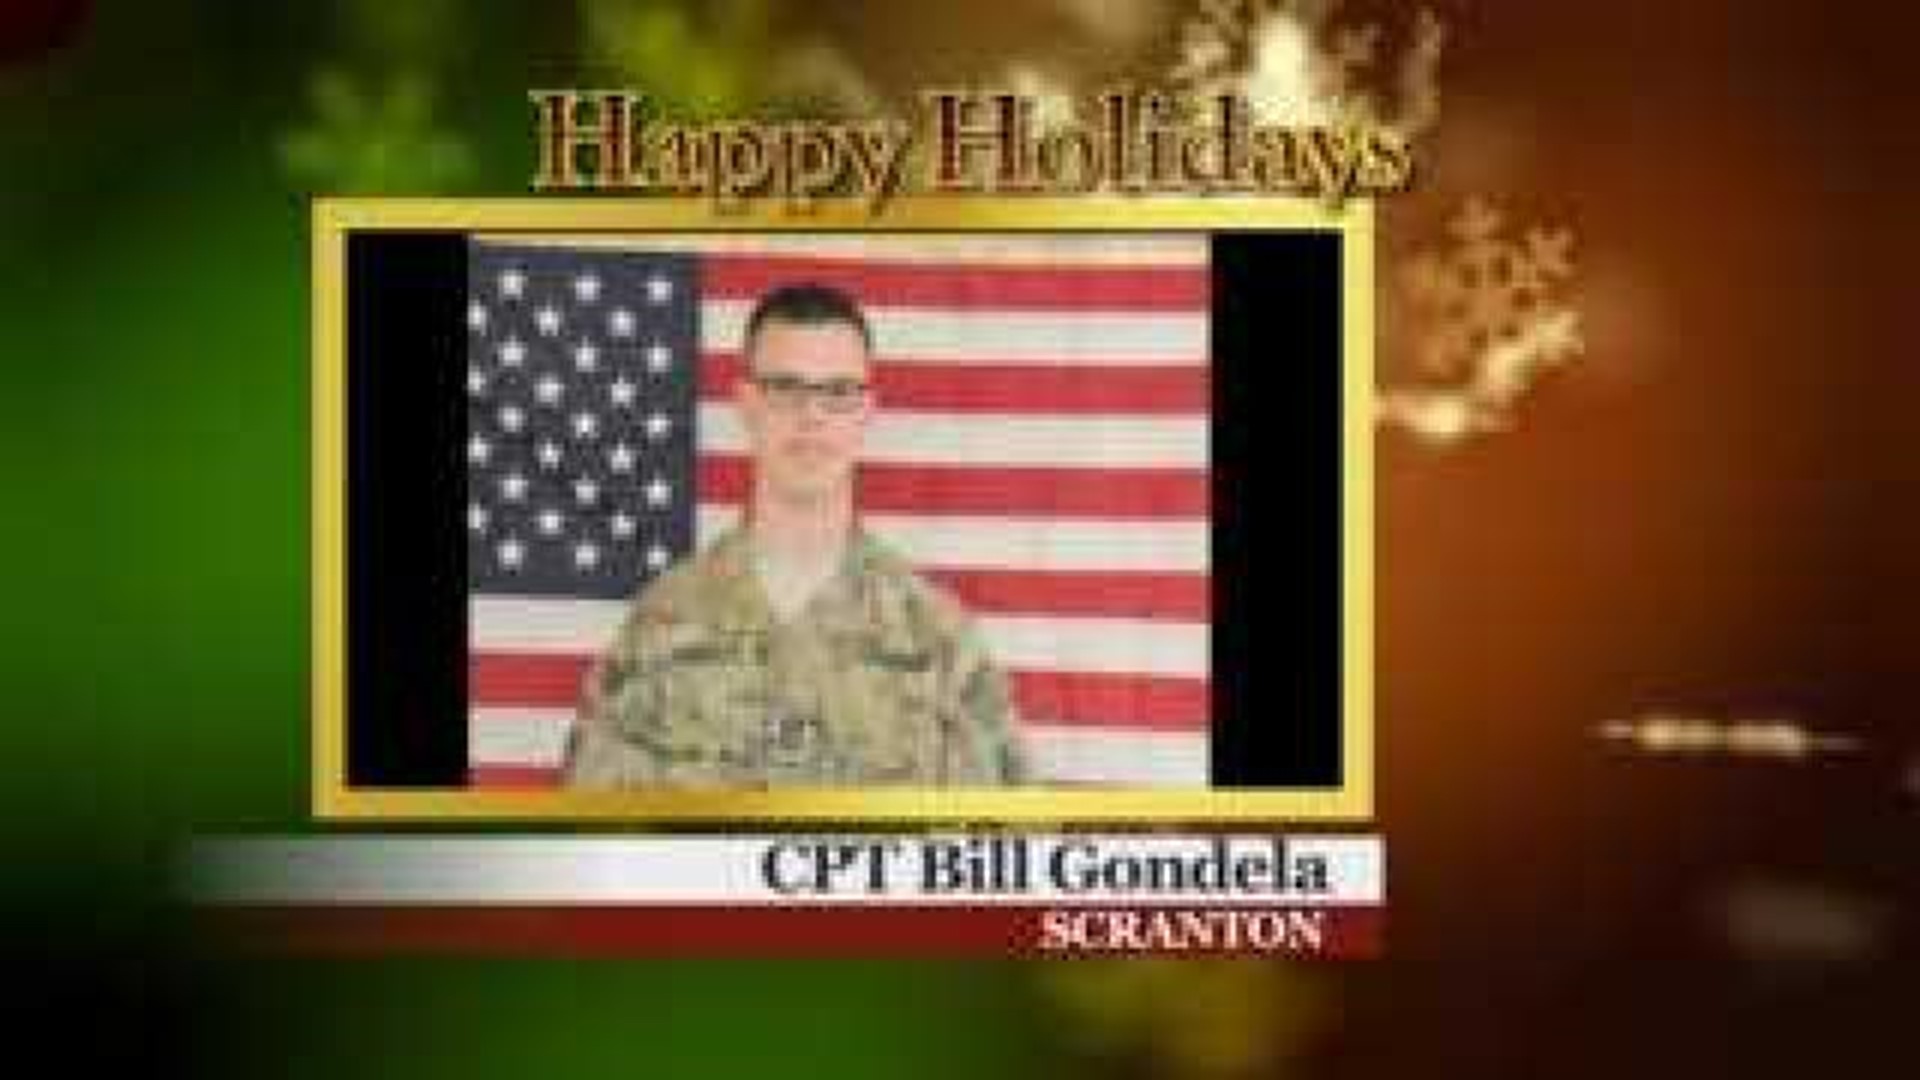 Military Greeting: CPT Bill Gondela